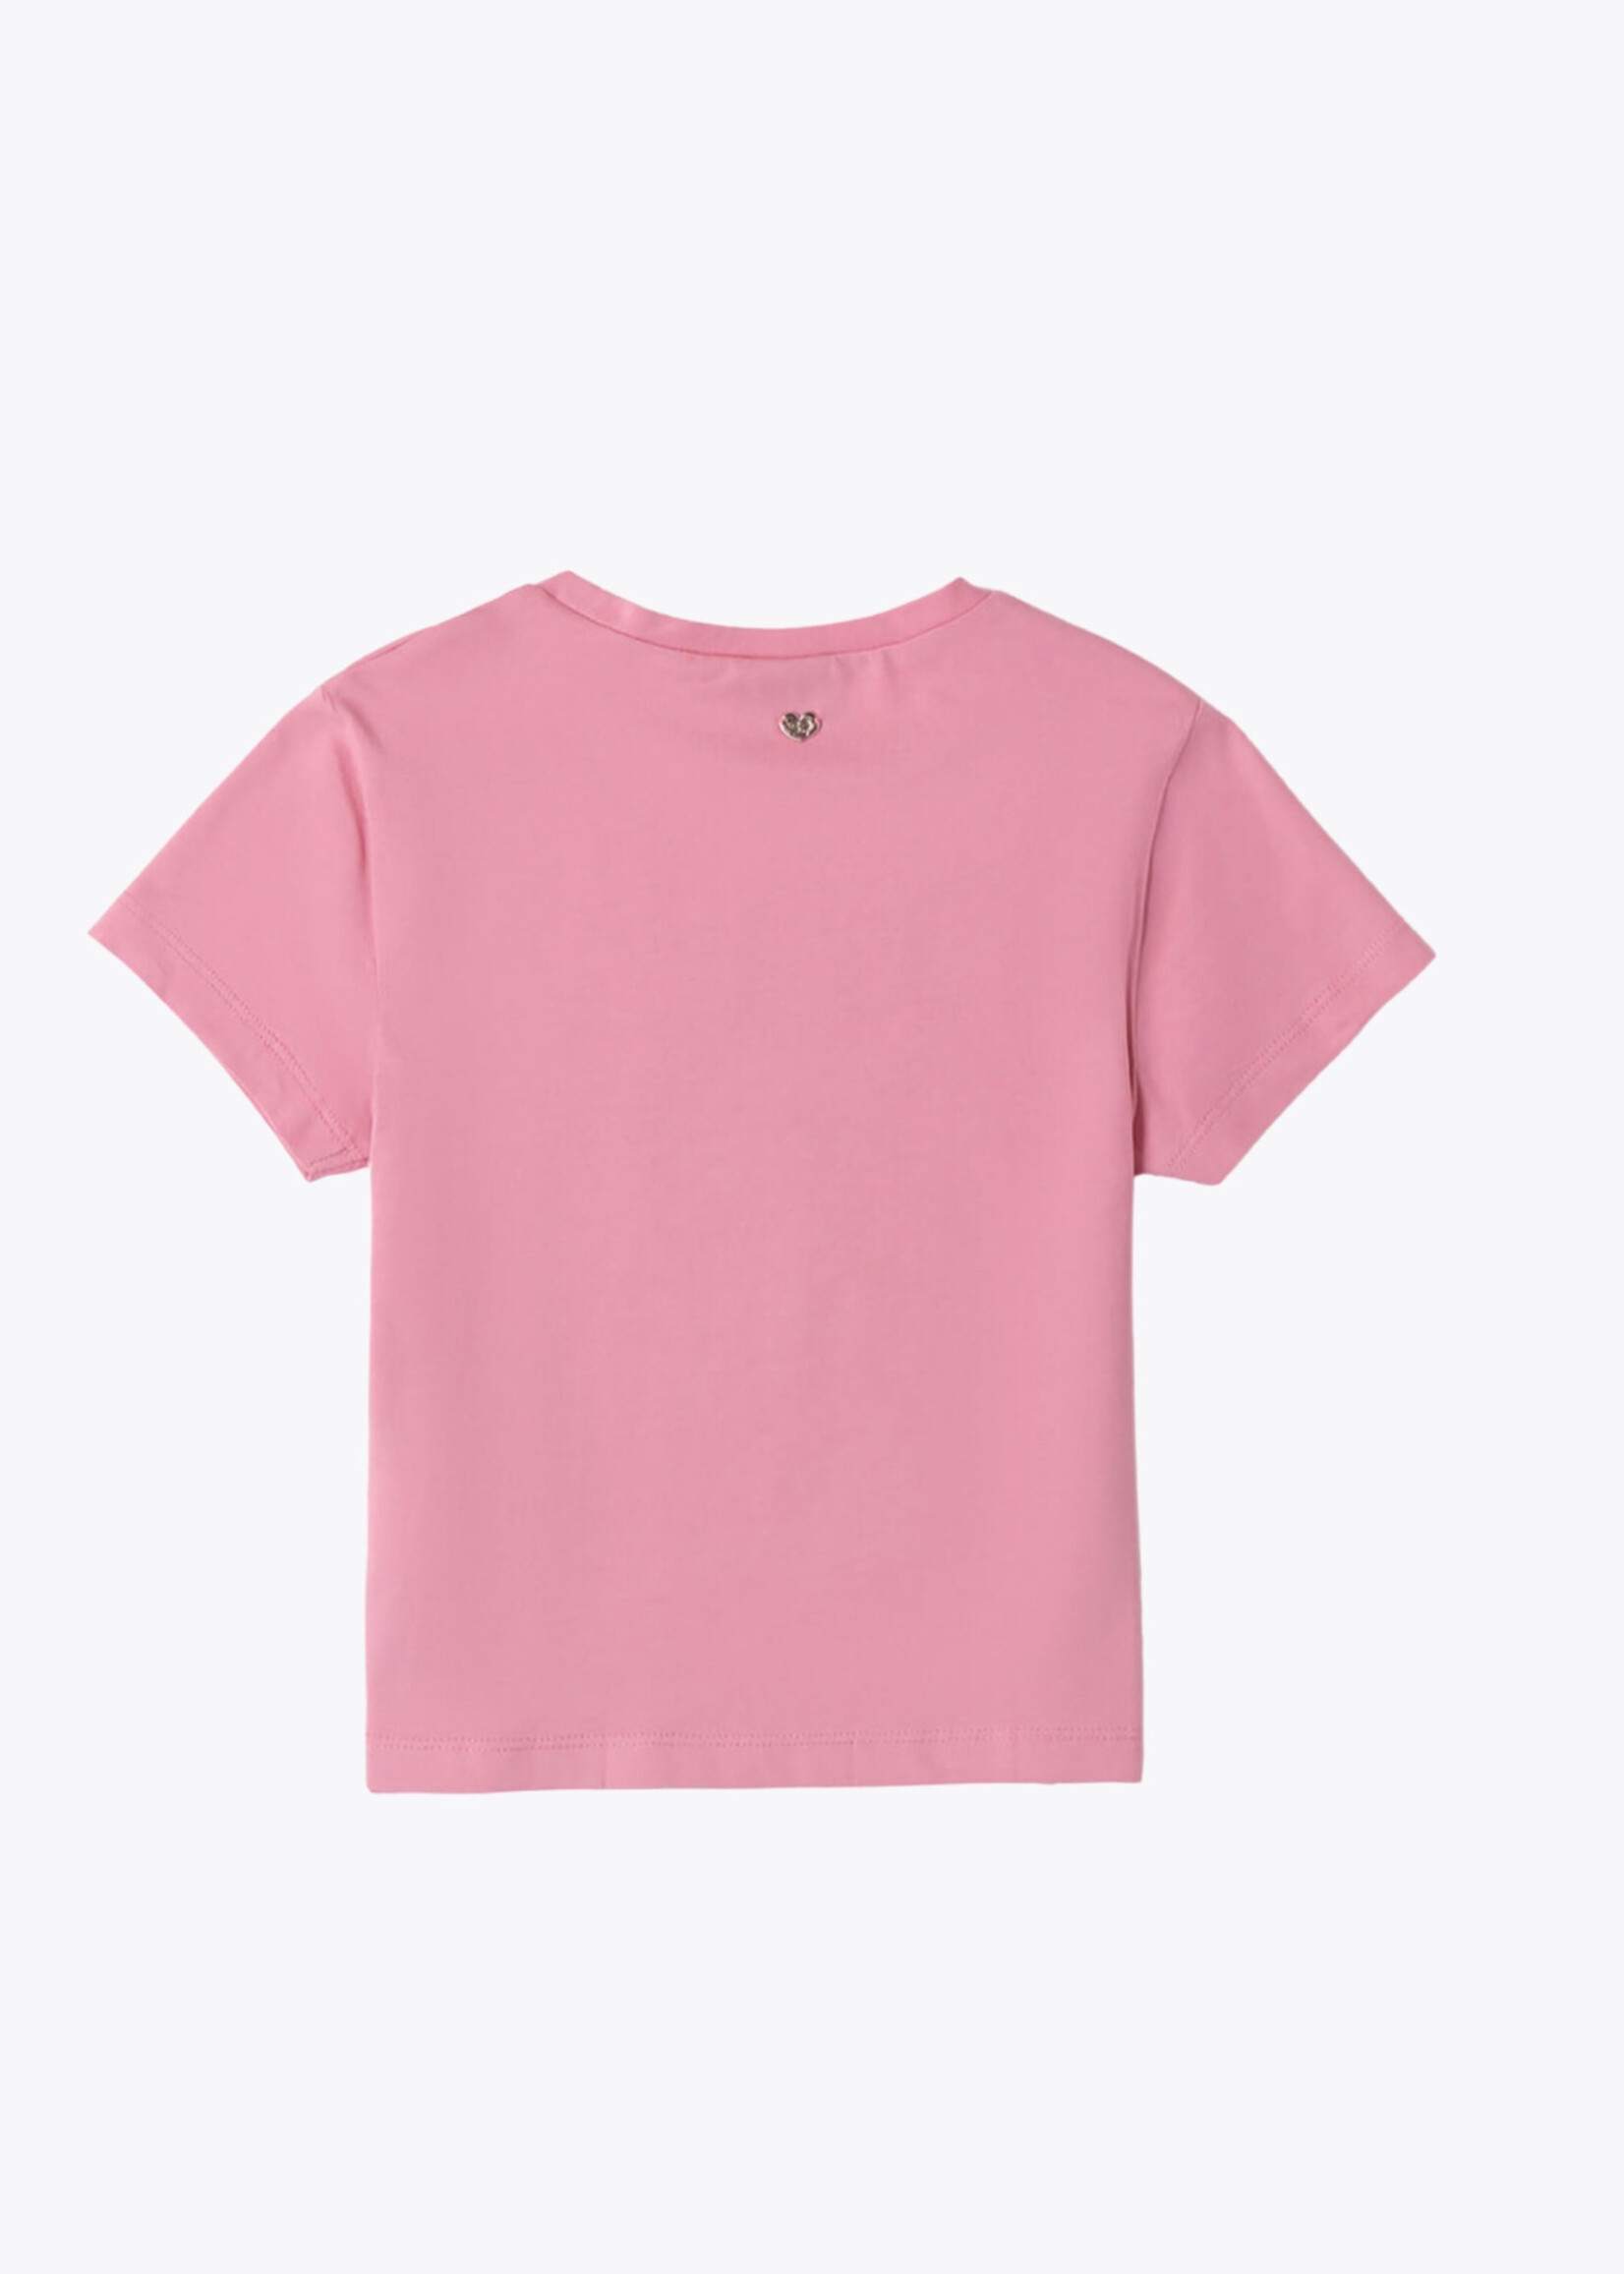 Sarabanda T-shirt in Pink with logo in strass.